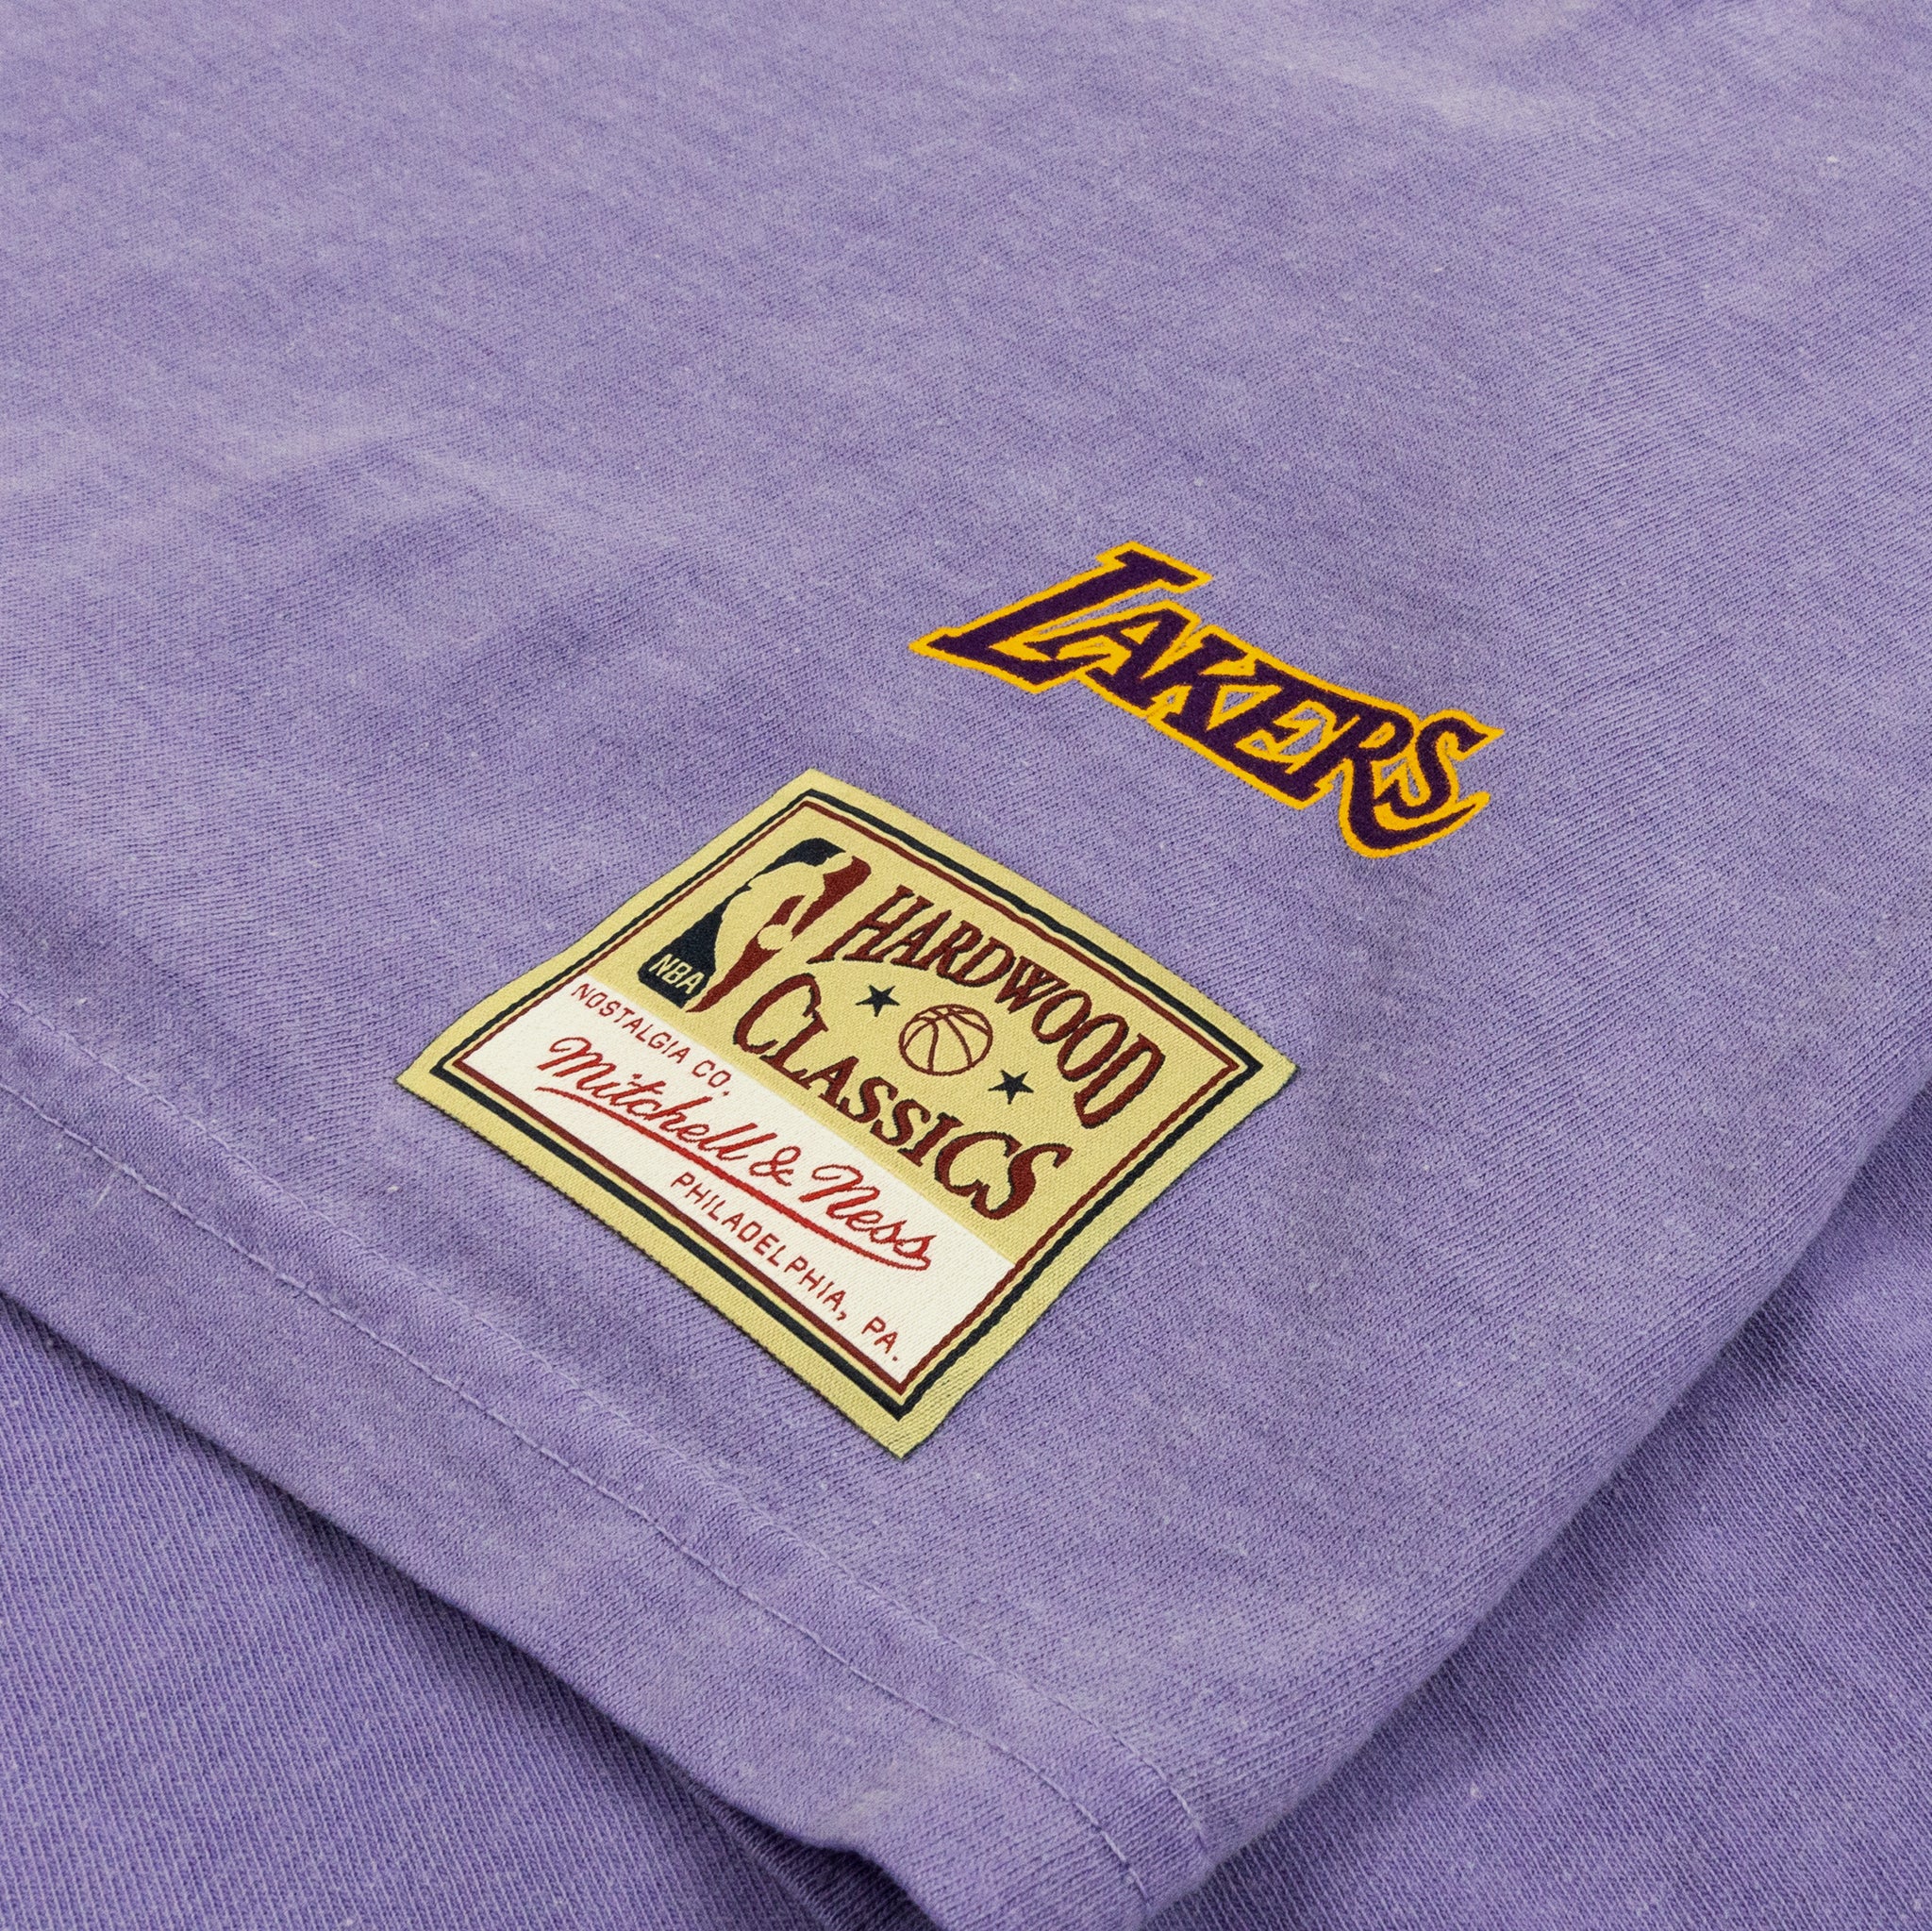 Mitchell & Ness NBA Lakers t-shirt in purple